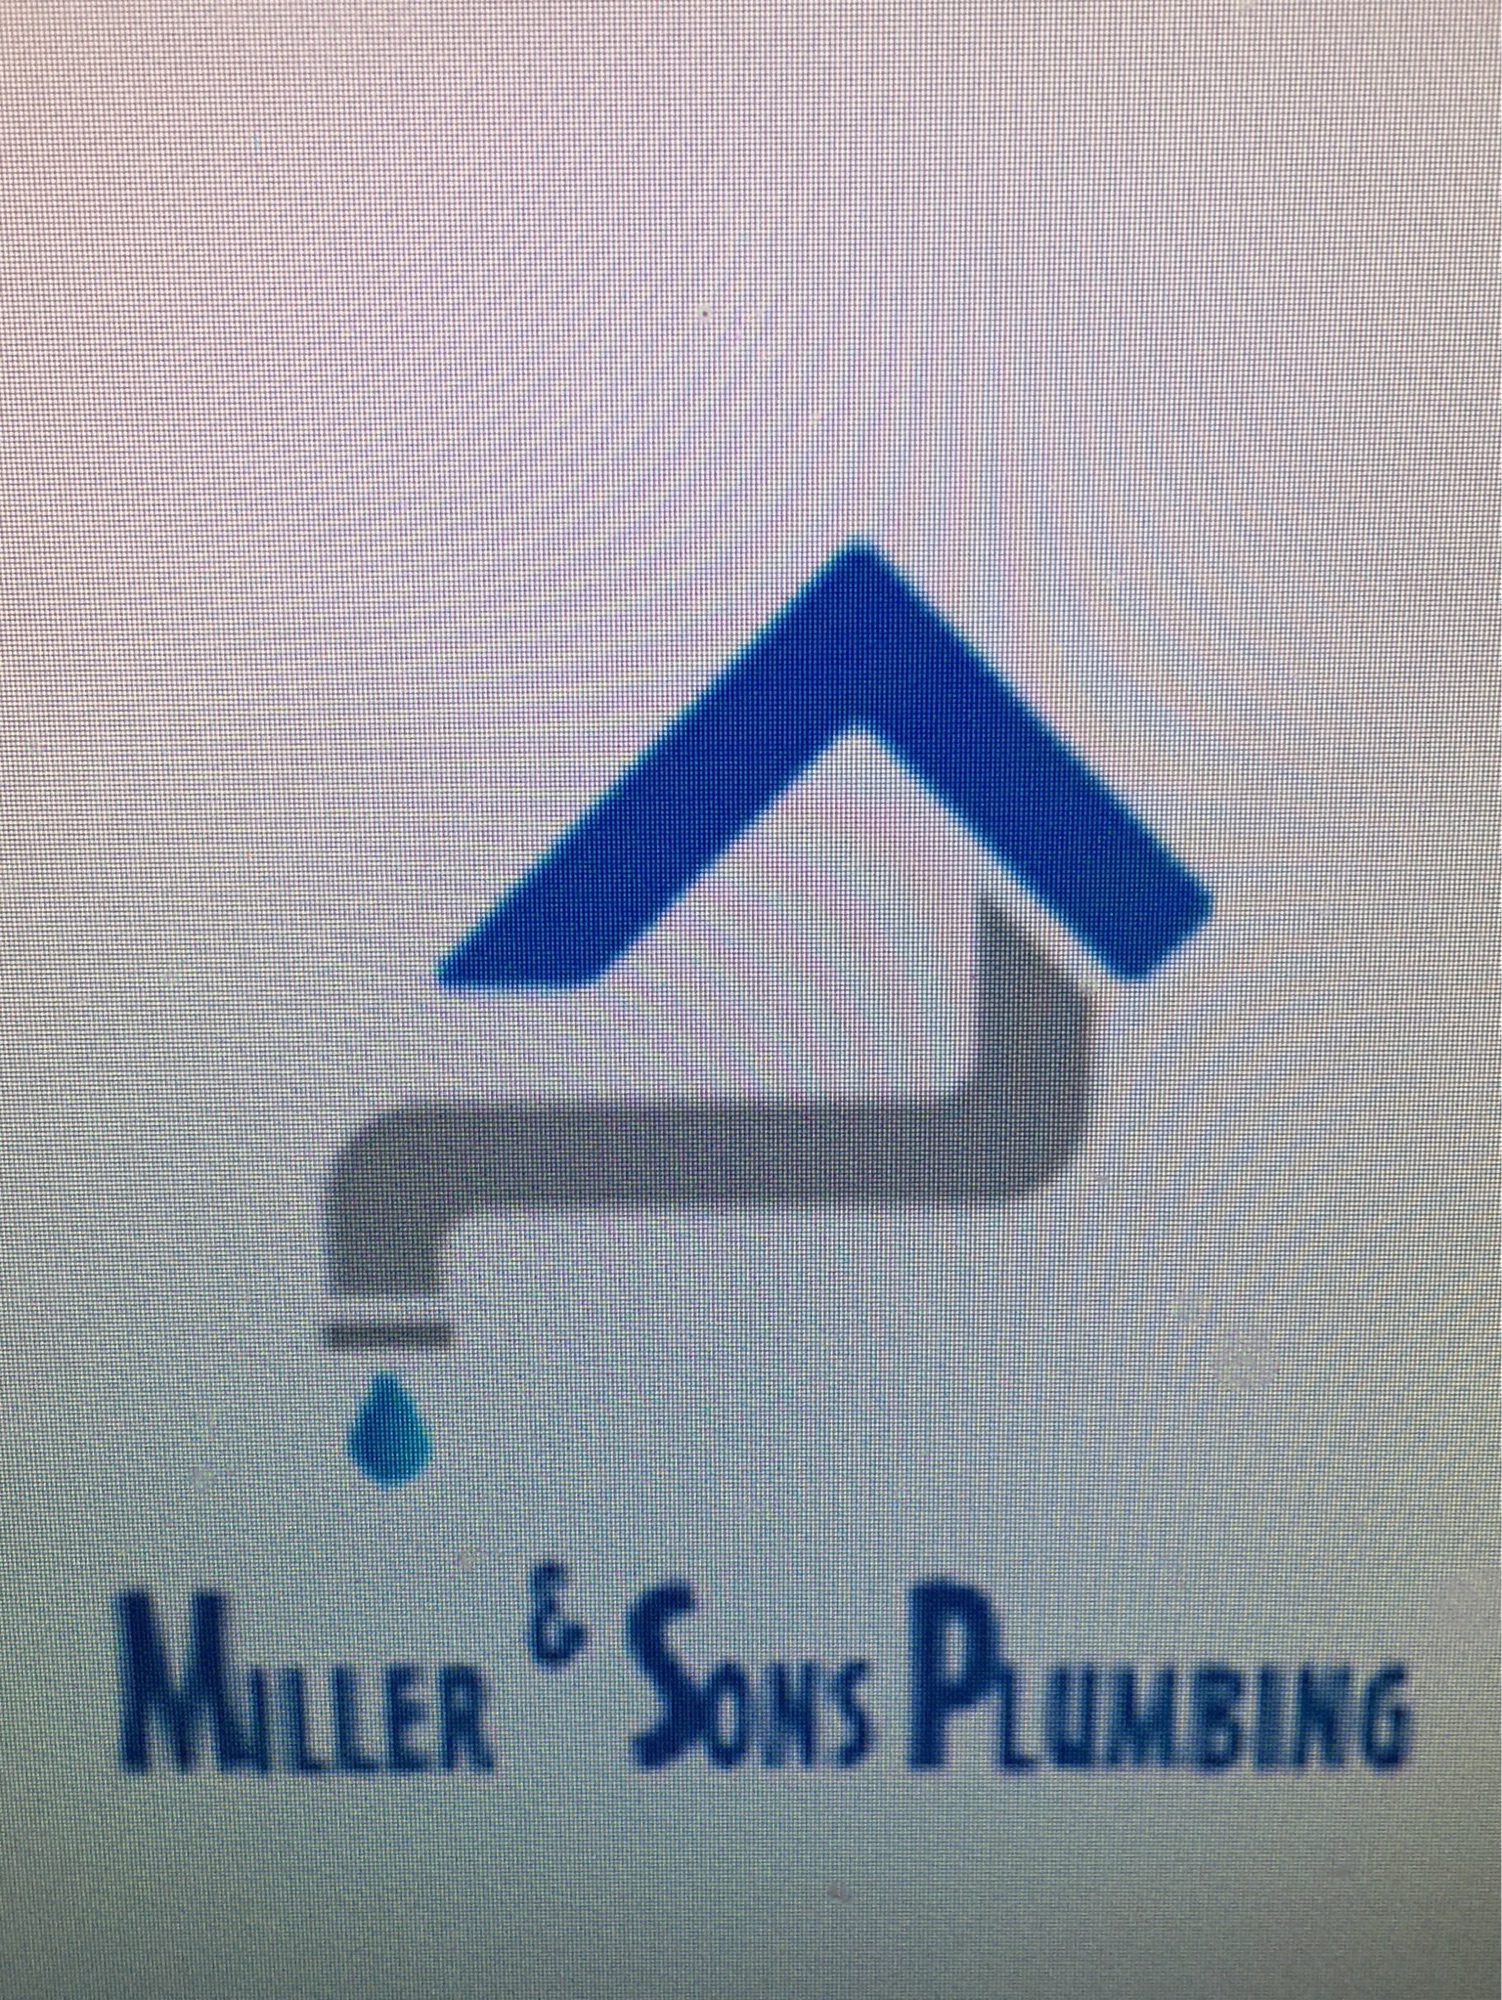 Miller and Sons Plumbing, LLC Logo